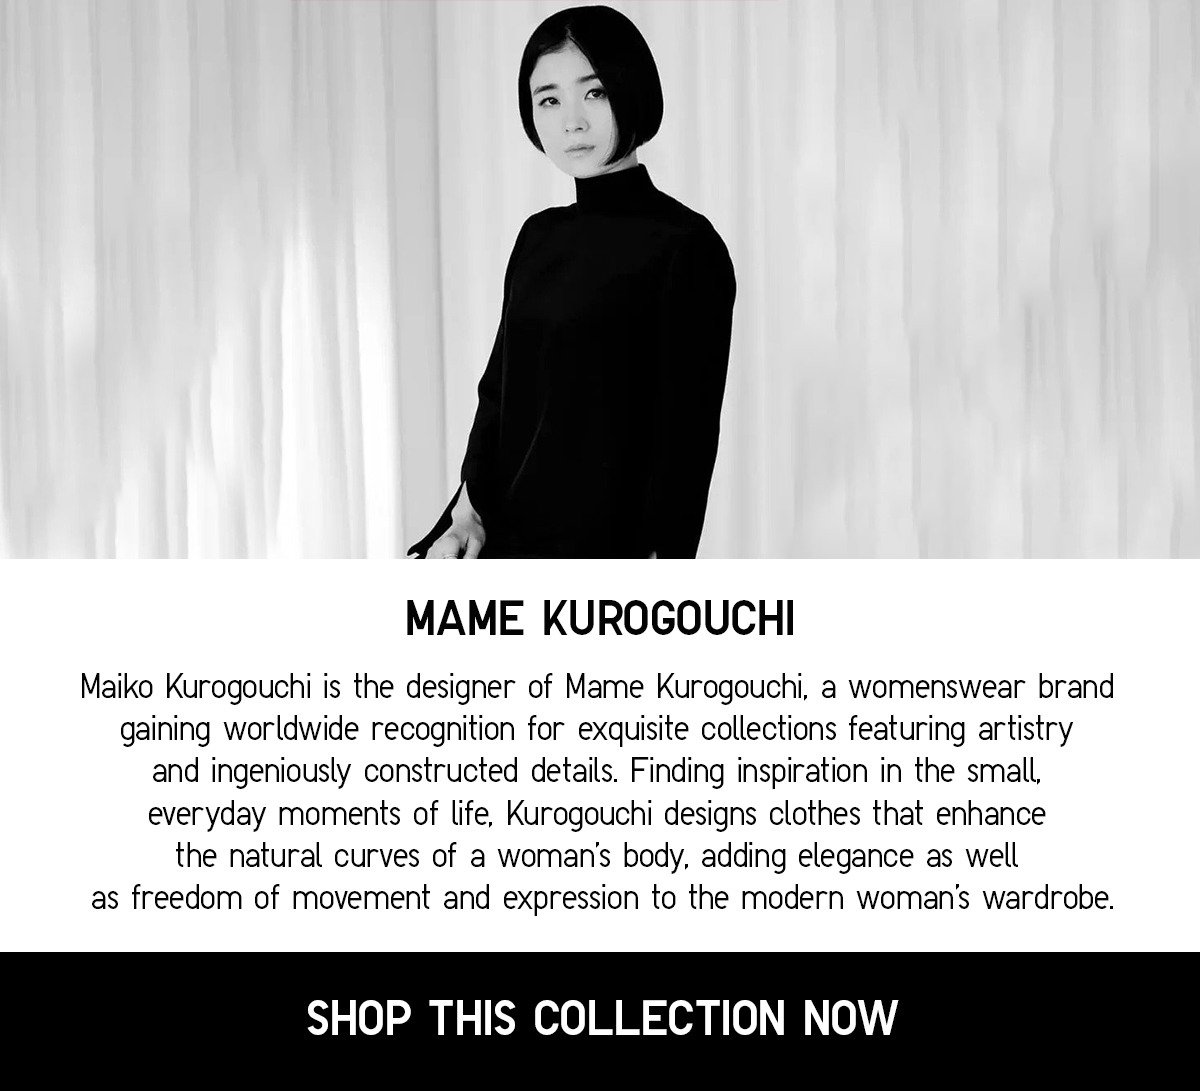 Mame Kurogouchi HEATTECH Knitted Tights (Sheer)